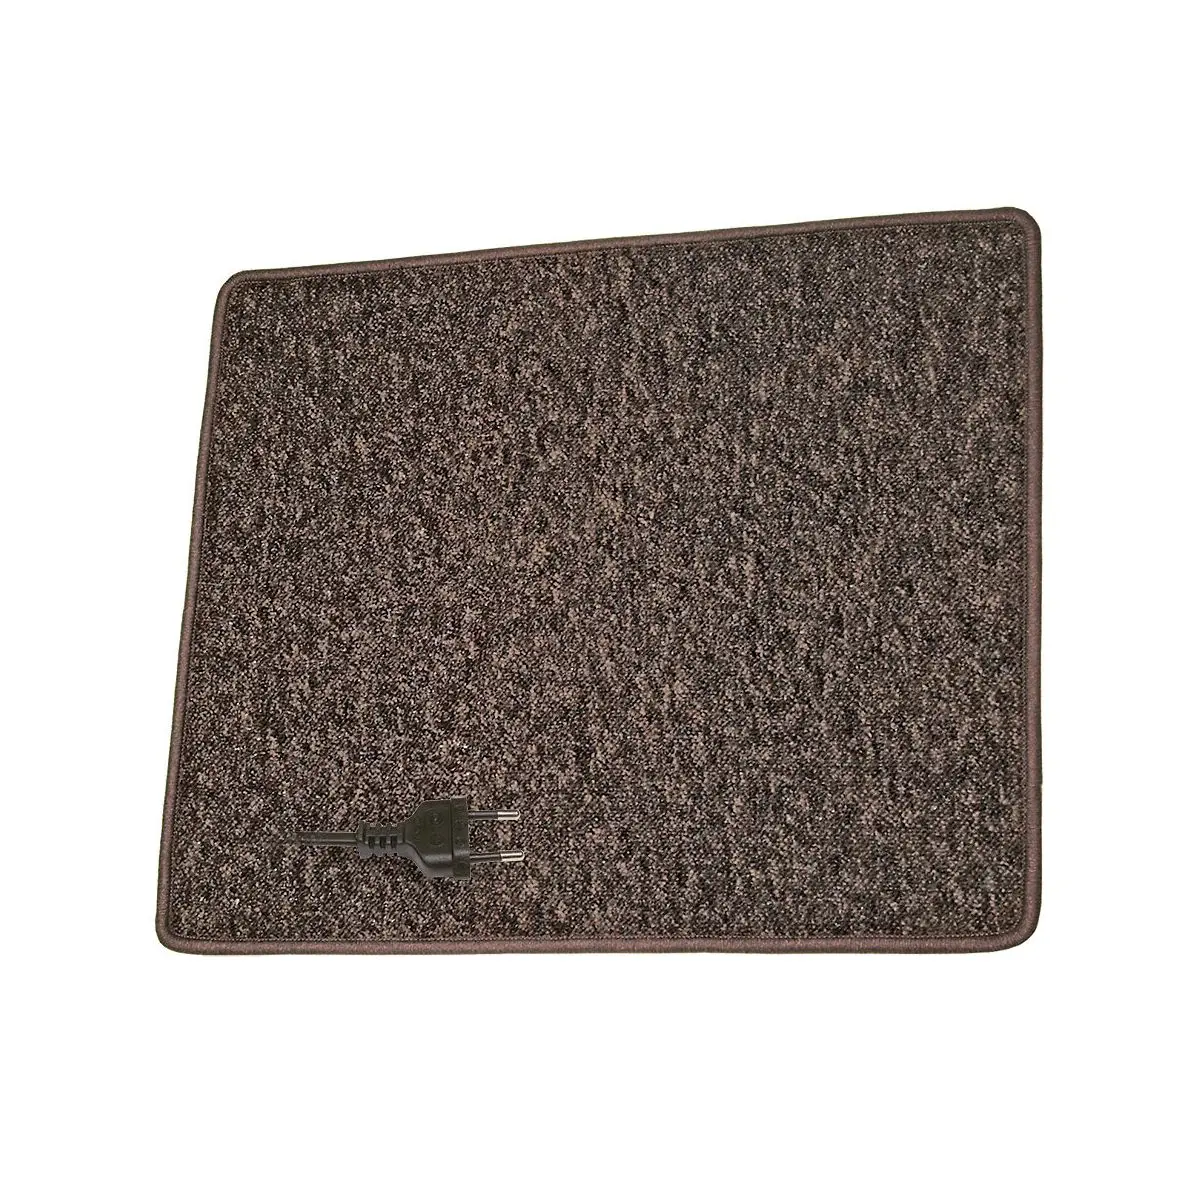 Fűtött szőnyeg - 230 V/70 W, 60 x 100 cm, barna